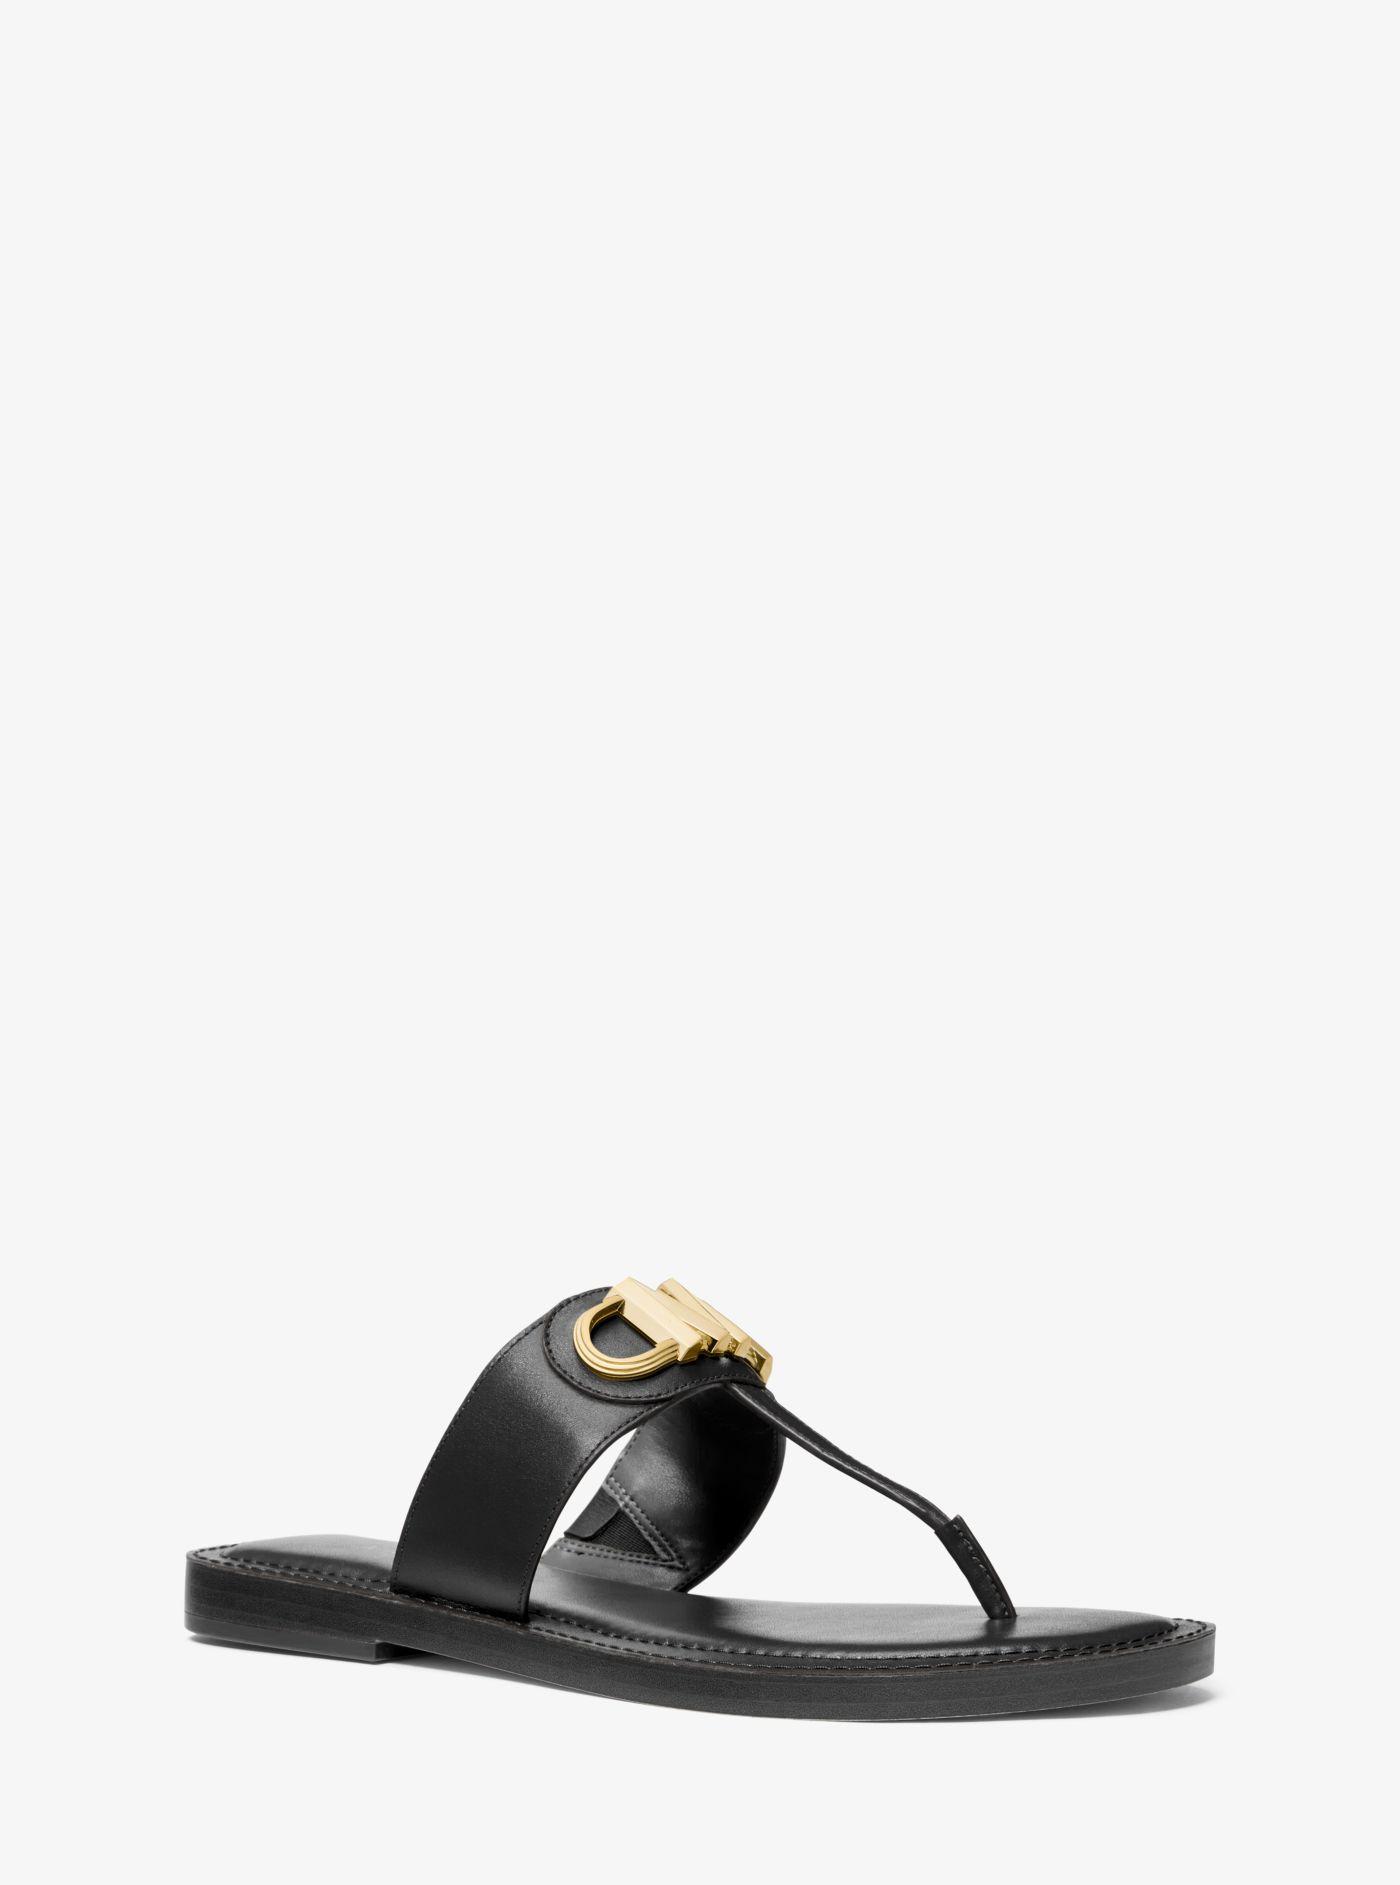 Michael Kors Parker Leather T-strap Sandal in Black | Lyst